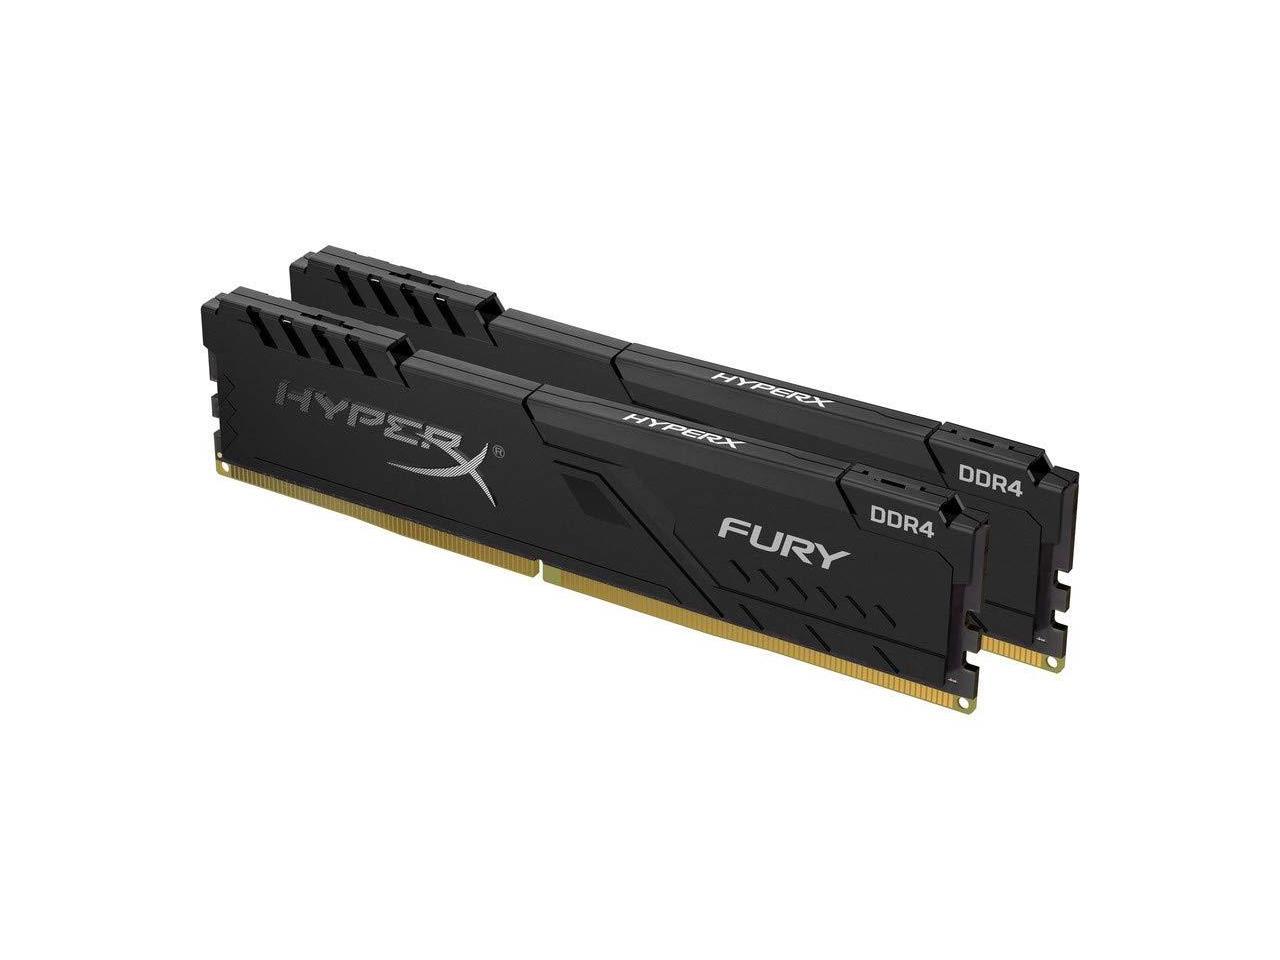 HyperX Fury 32GB 2666MHz DDR4 Ram CL16 DIMM  Black Single Stick Desktop Memory with low-profile heat spreader 